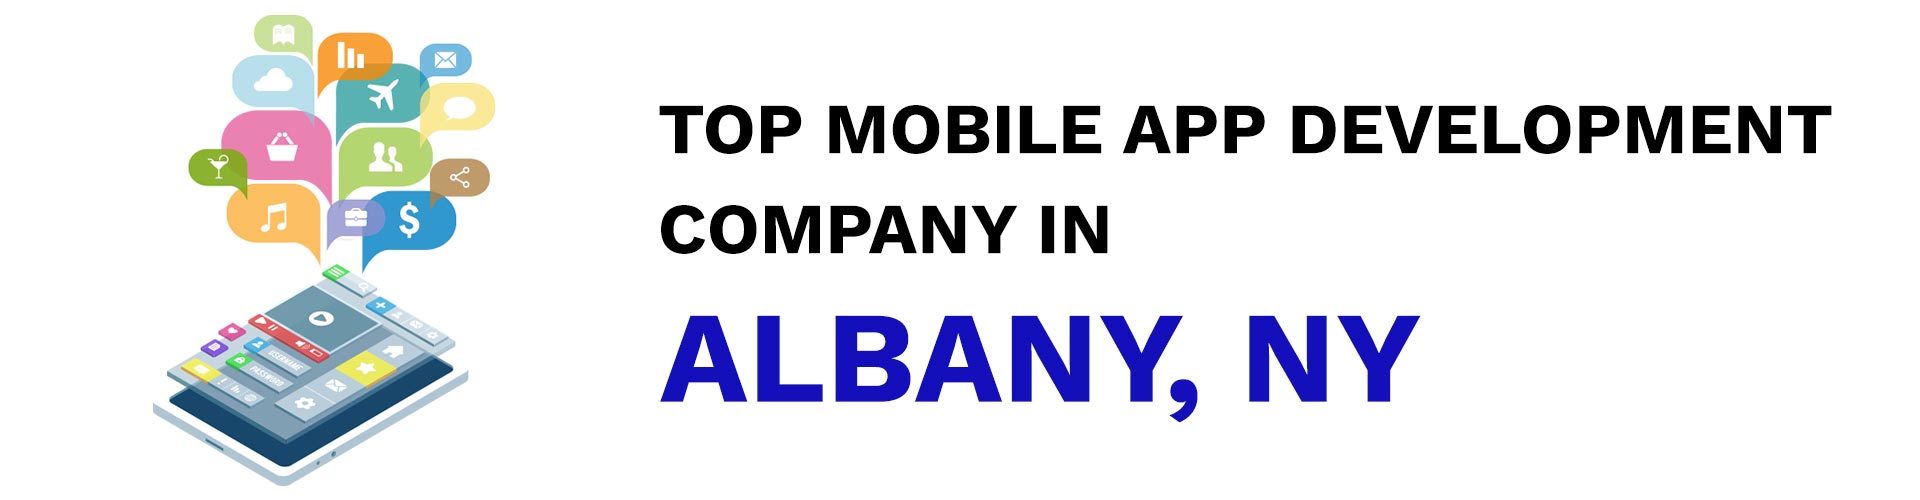 mobile app development company albany